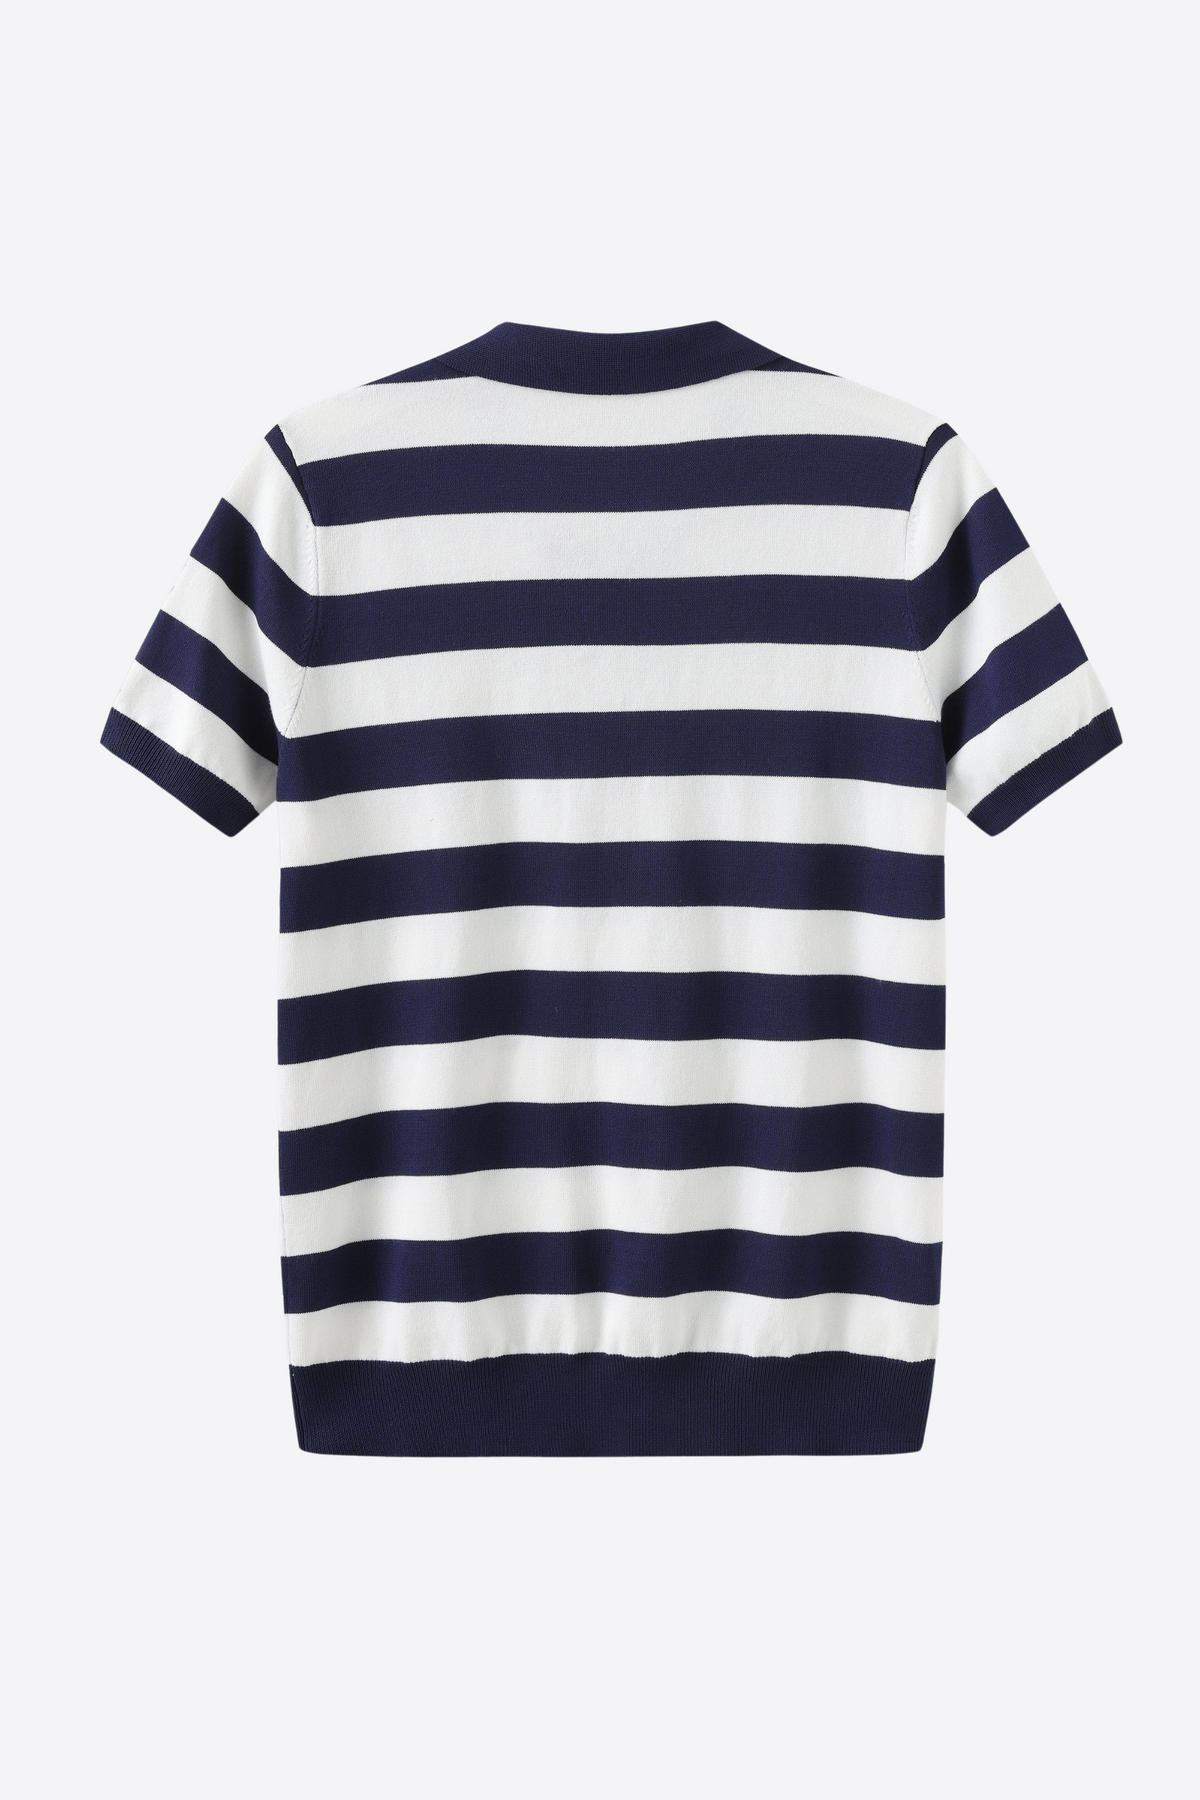 ELIGIO™ | Striped Short Sleeve Polo Shirt